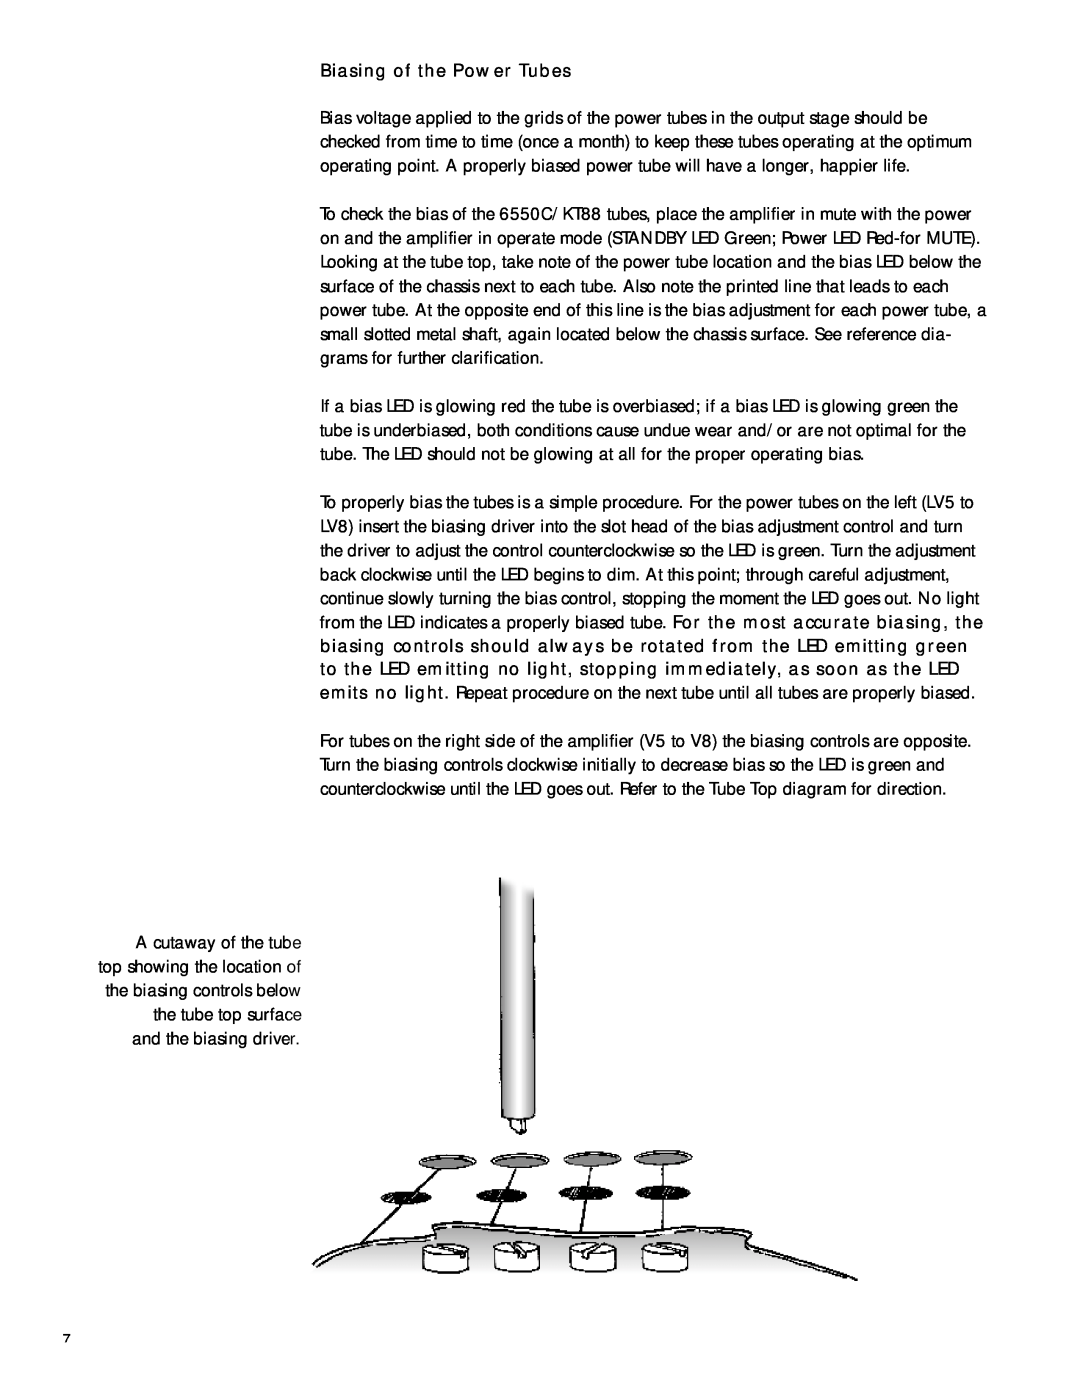 Sonic Impact Technologies Power 2 manual Biasing of the Power Tubes 